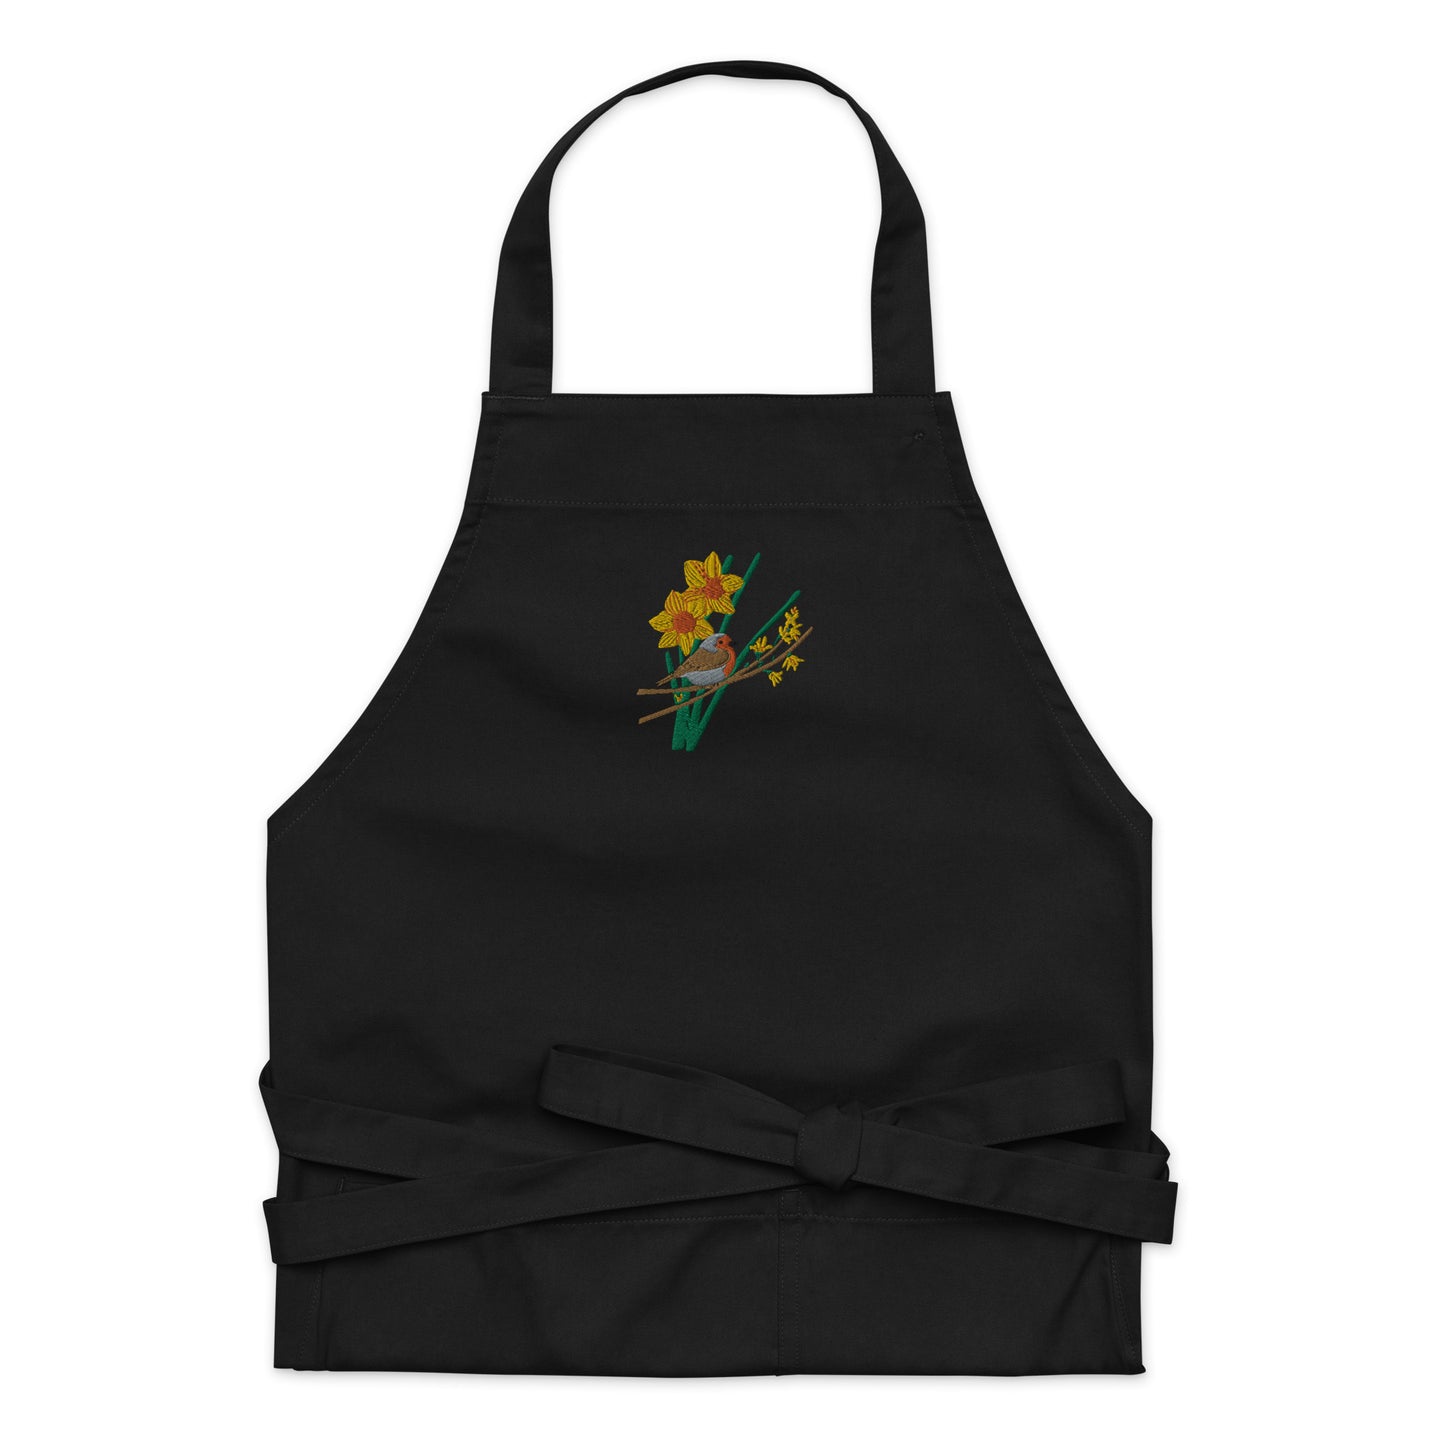 Robin and Daffodils Organic cotton apron